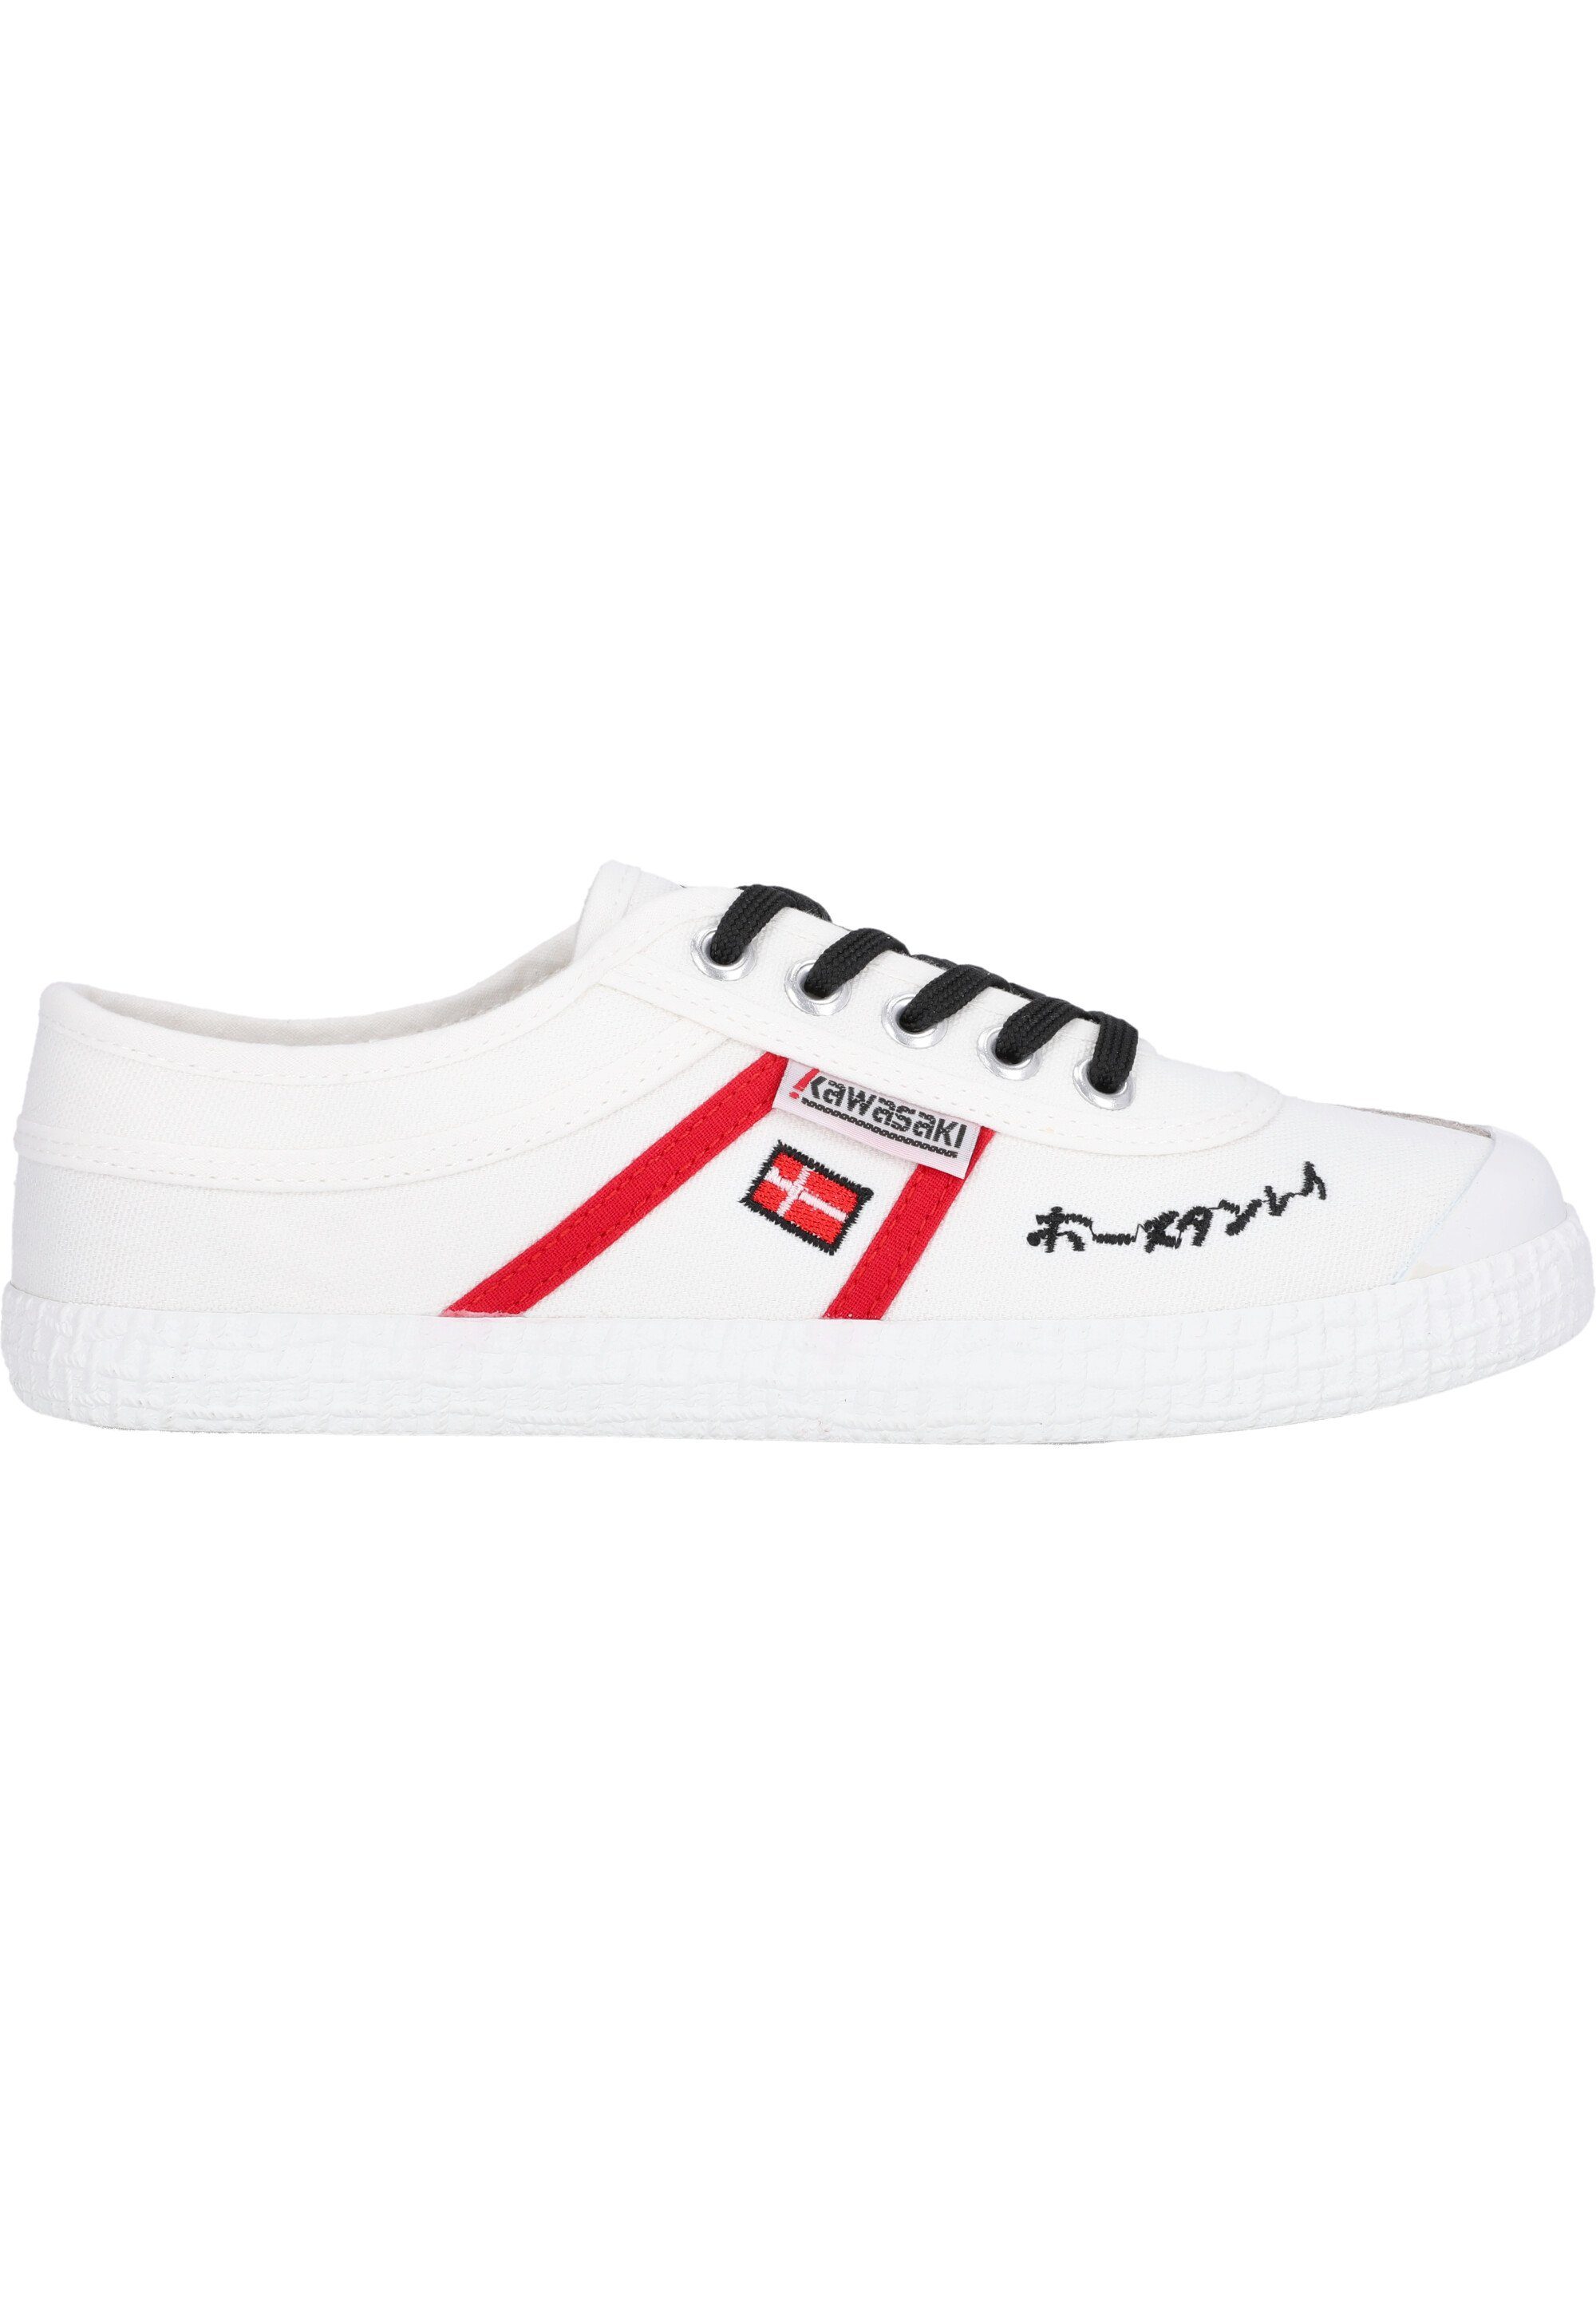 trendigen Kawasaki im weiß Retrodesign Signature Sneaker